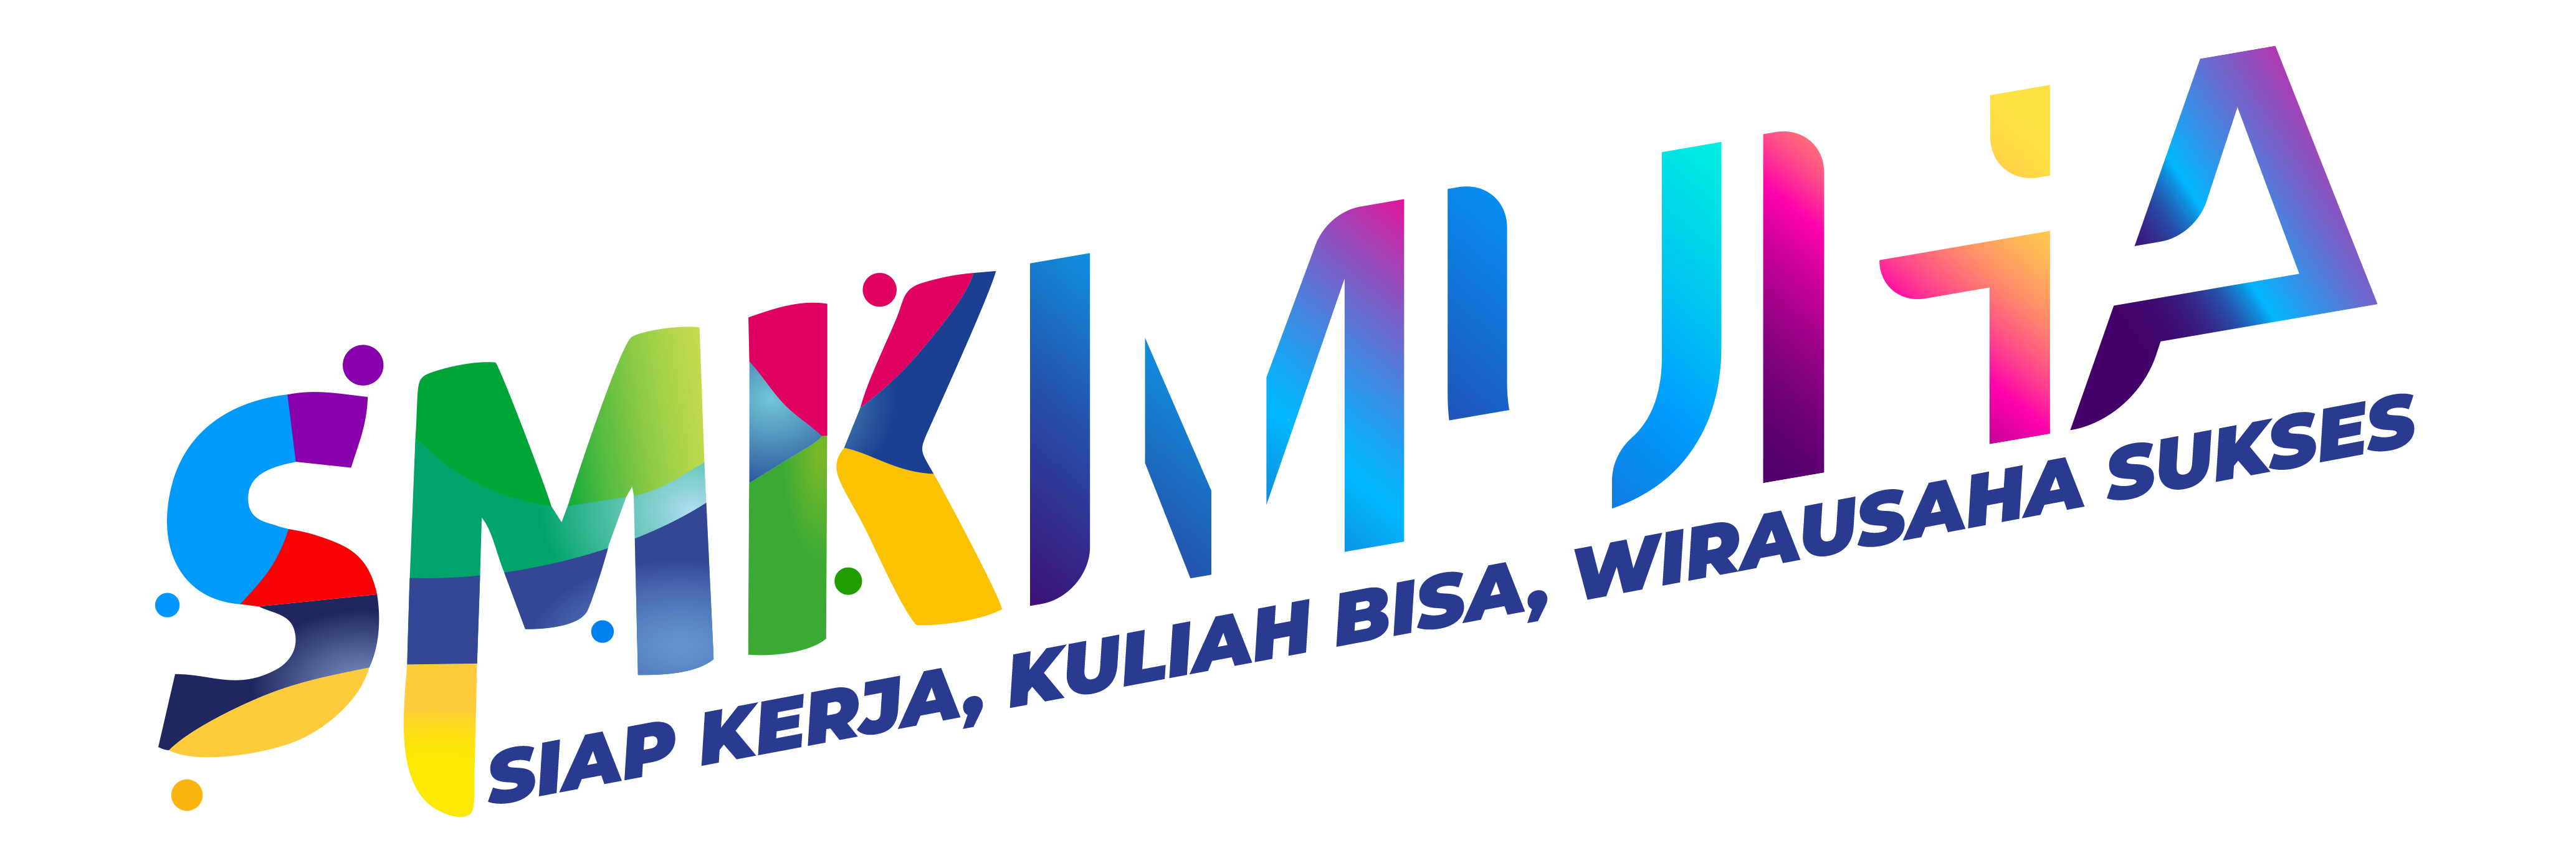 SMK MUHAMMADIYAH 4 JAKARTA SIAP MENSUKSESKAN PISA 2022 | SMK Muhammadiyah 4 Jakarta